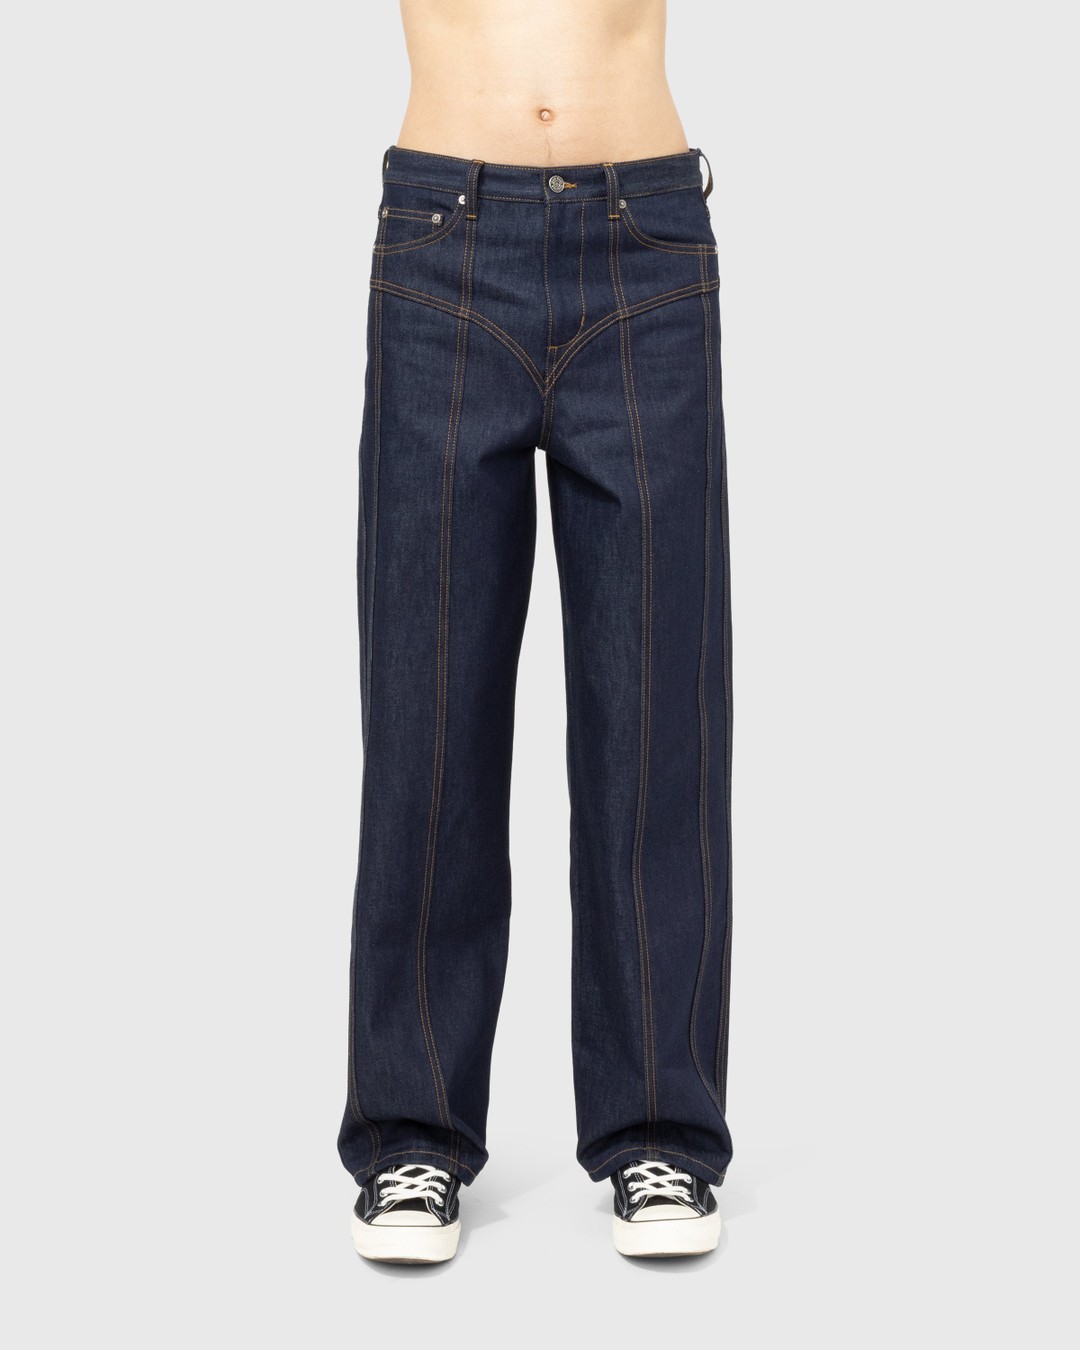 Jean Paul Gaultier – Raw Low-Rise Jeans Indigo - Pants - Blue - Image 3